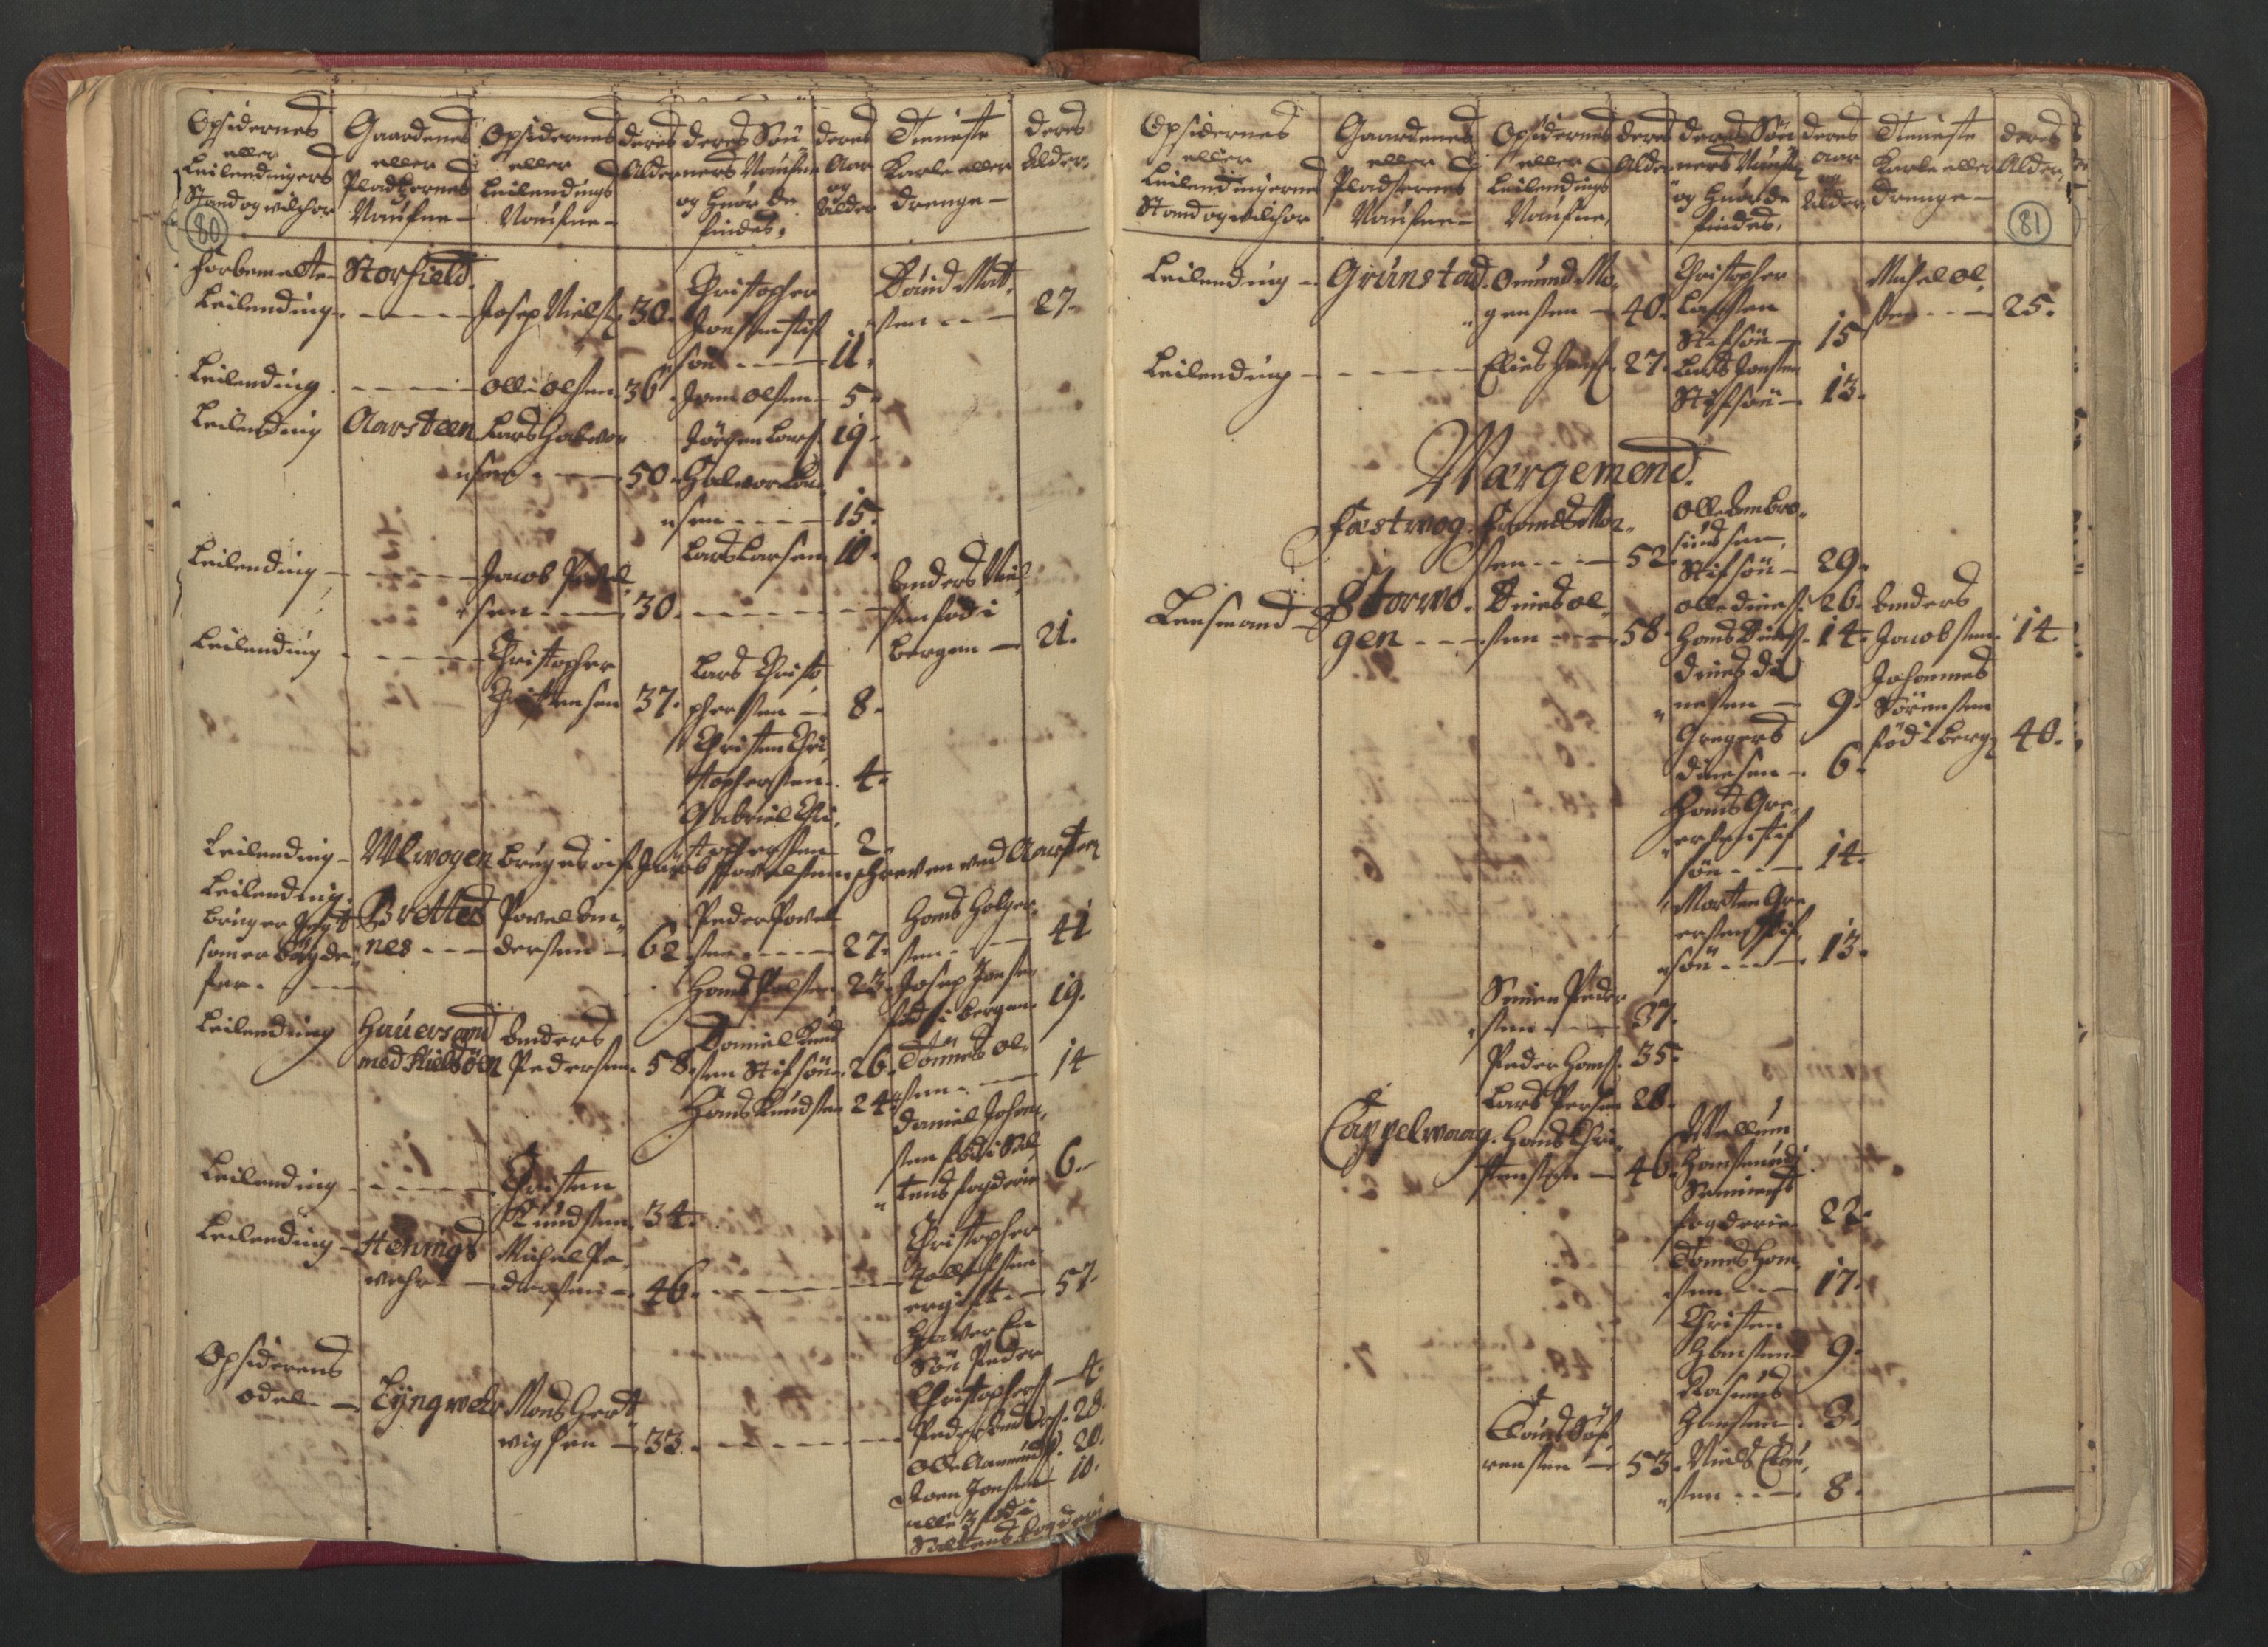 RA, Manntallet 1701, nr. 18: Vesterålen, Andenes og Lofoten fogderi, 1701, s. 80-81